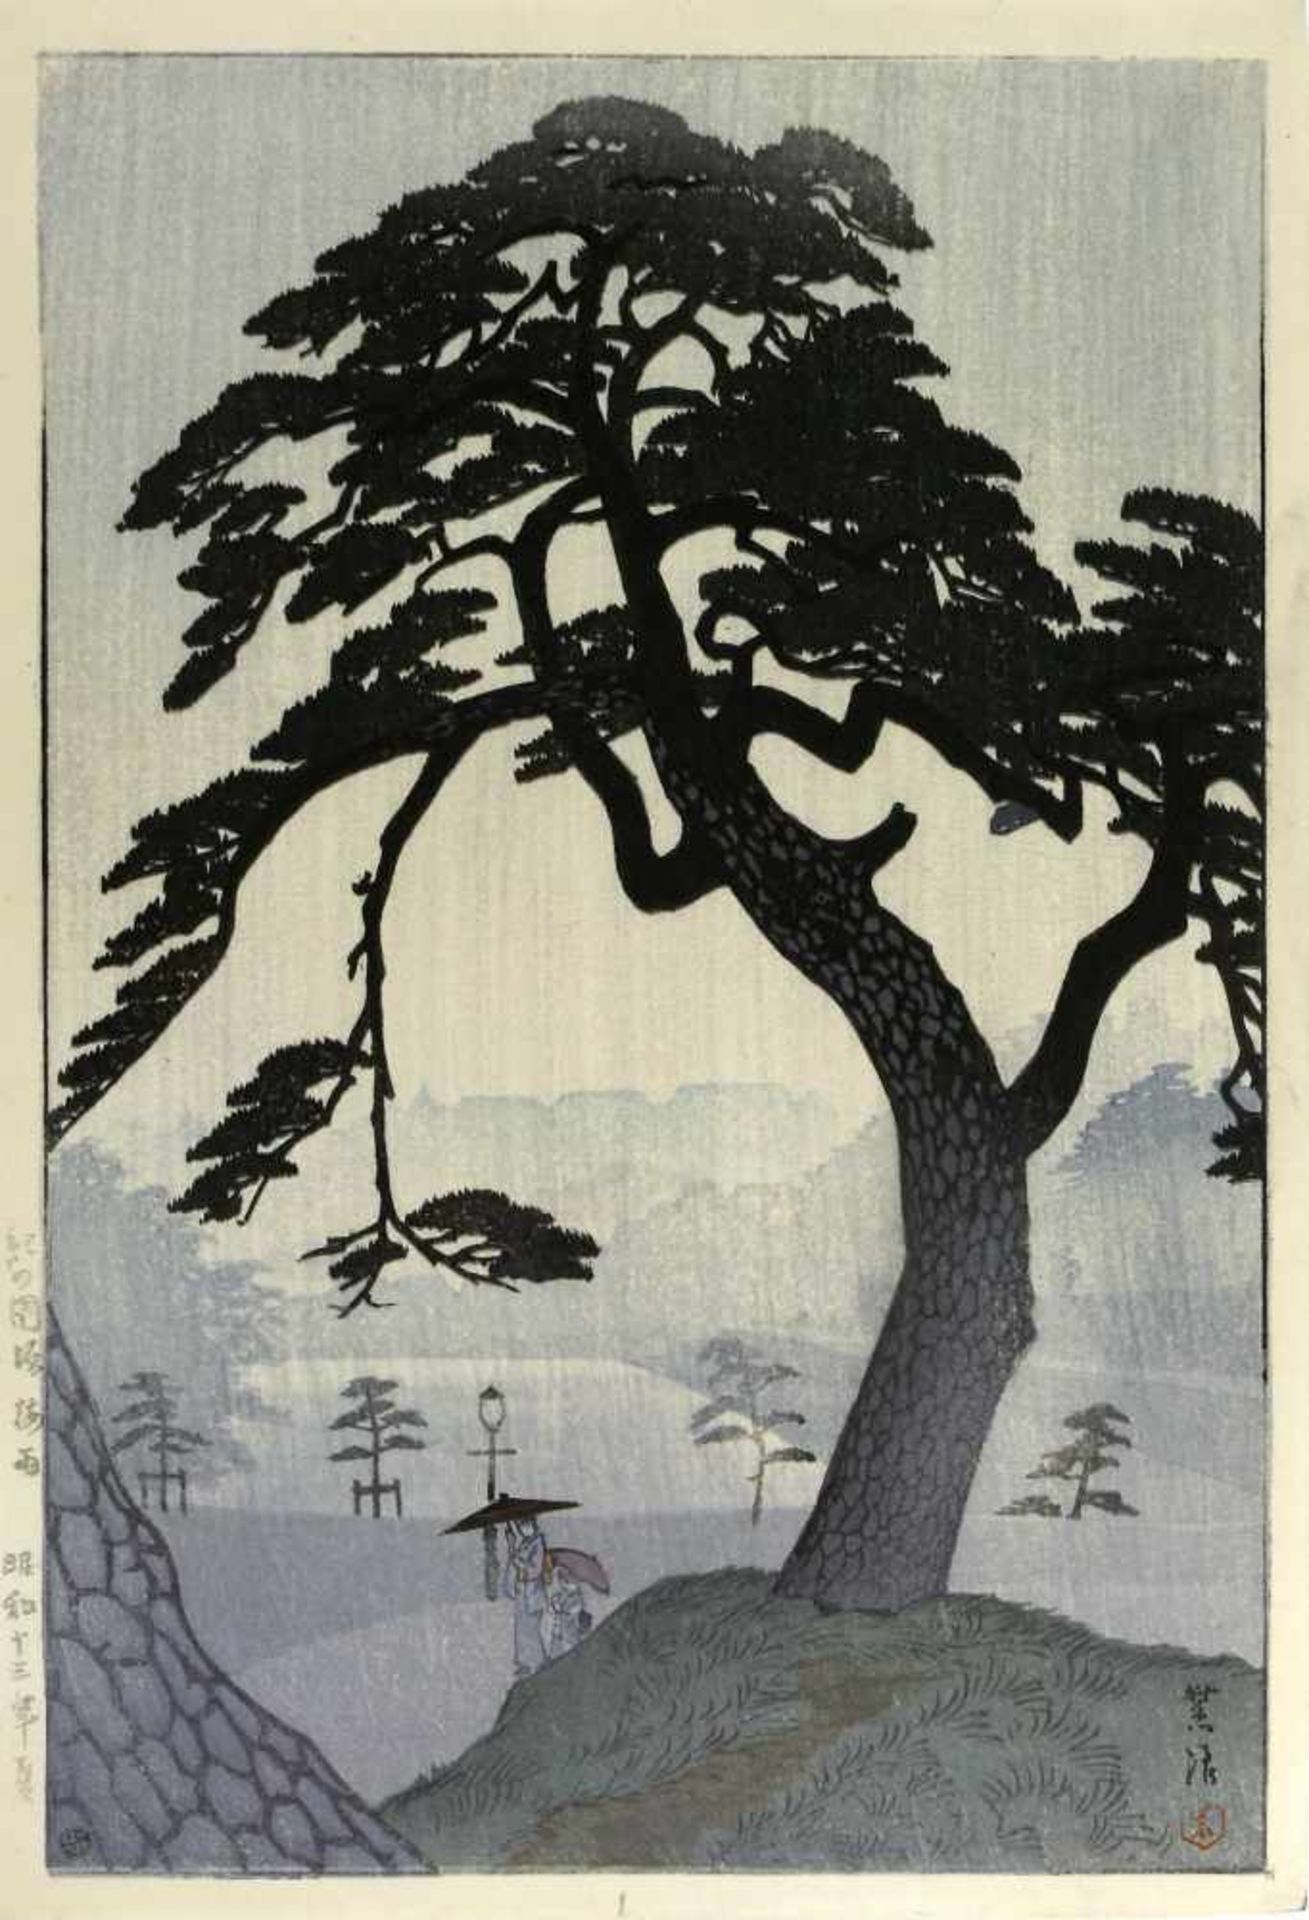 Japanischer Farbholzschnitt, Shiro, Kasamatsu (1898 - 1991)Kinokunizaka baiu (Regenzeit am